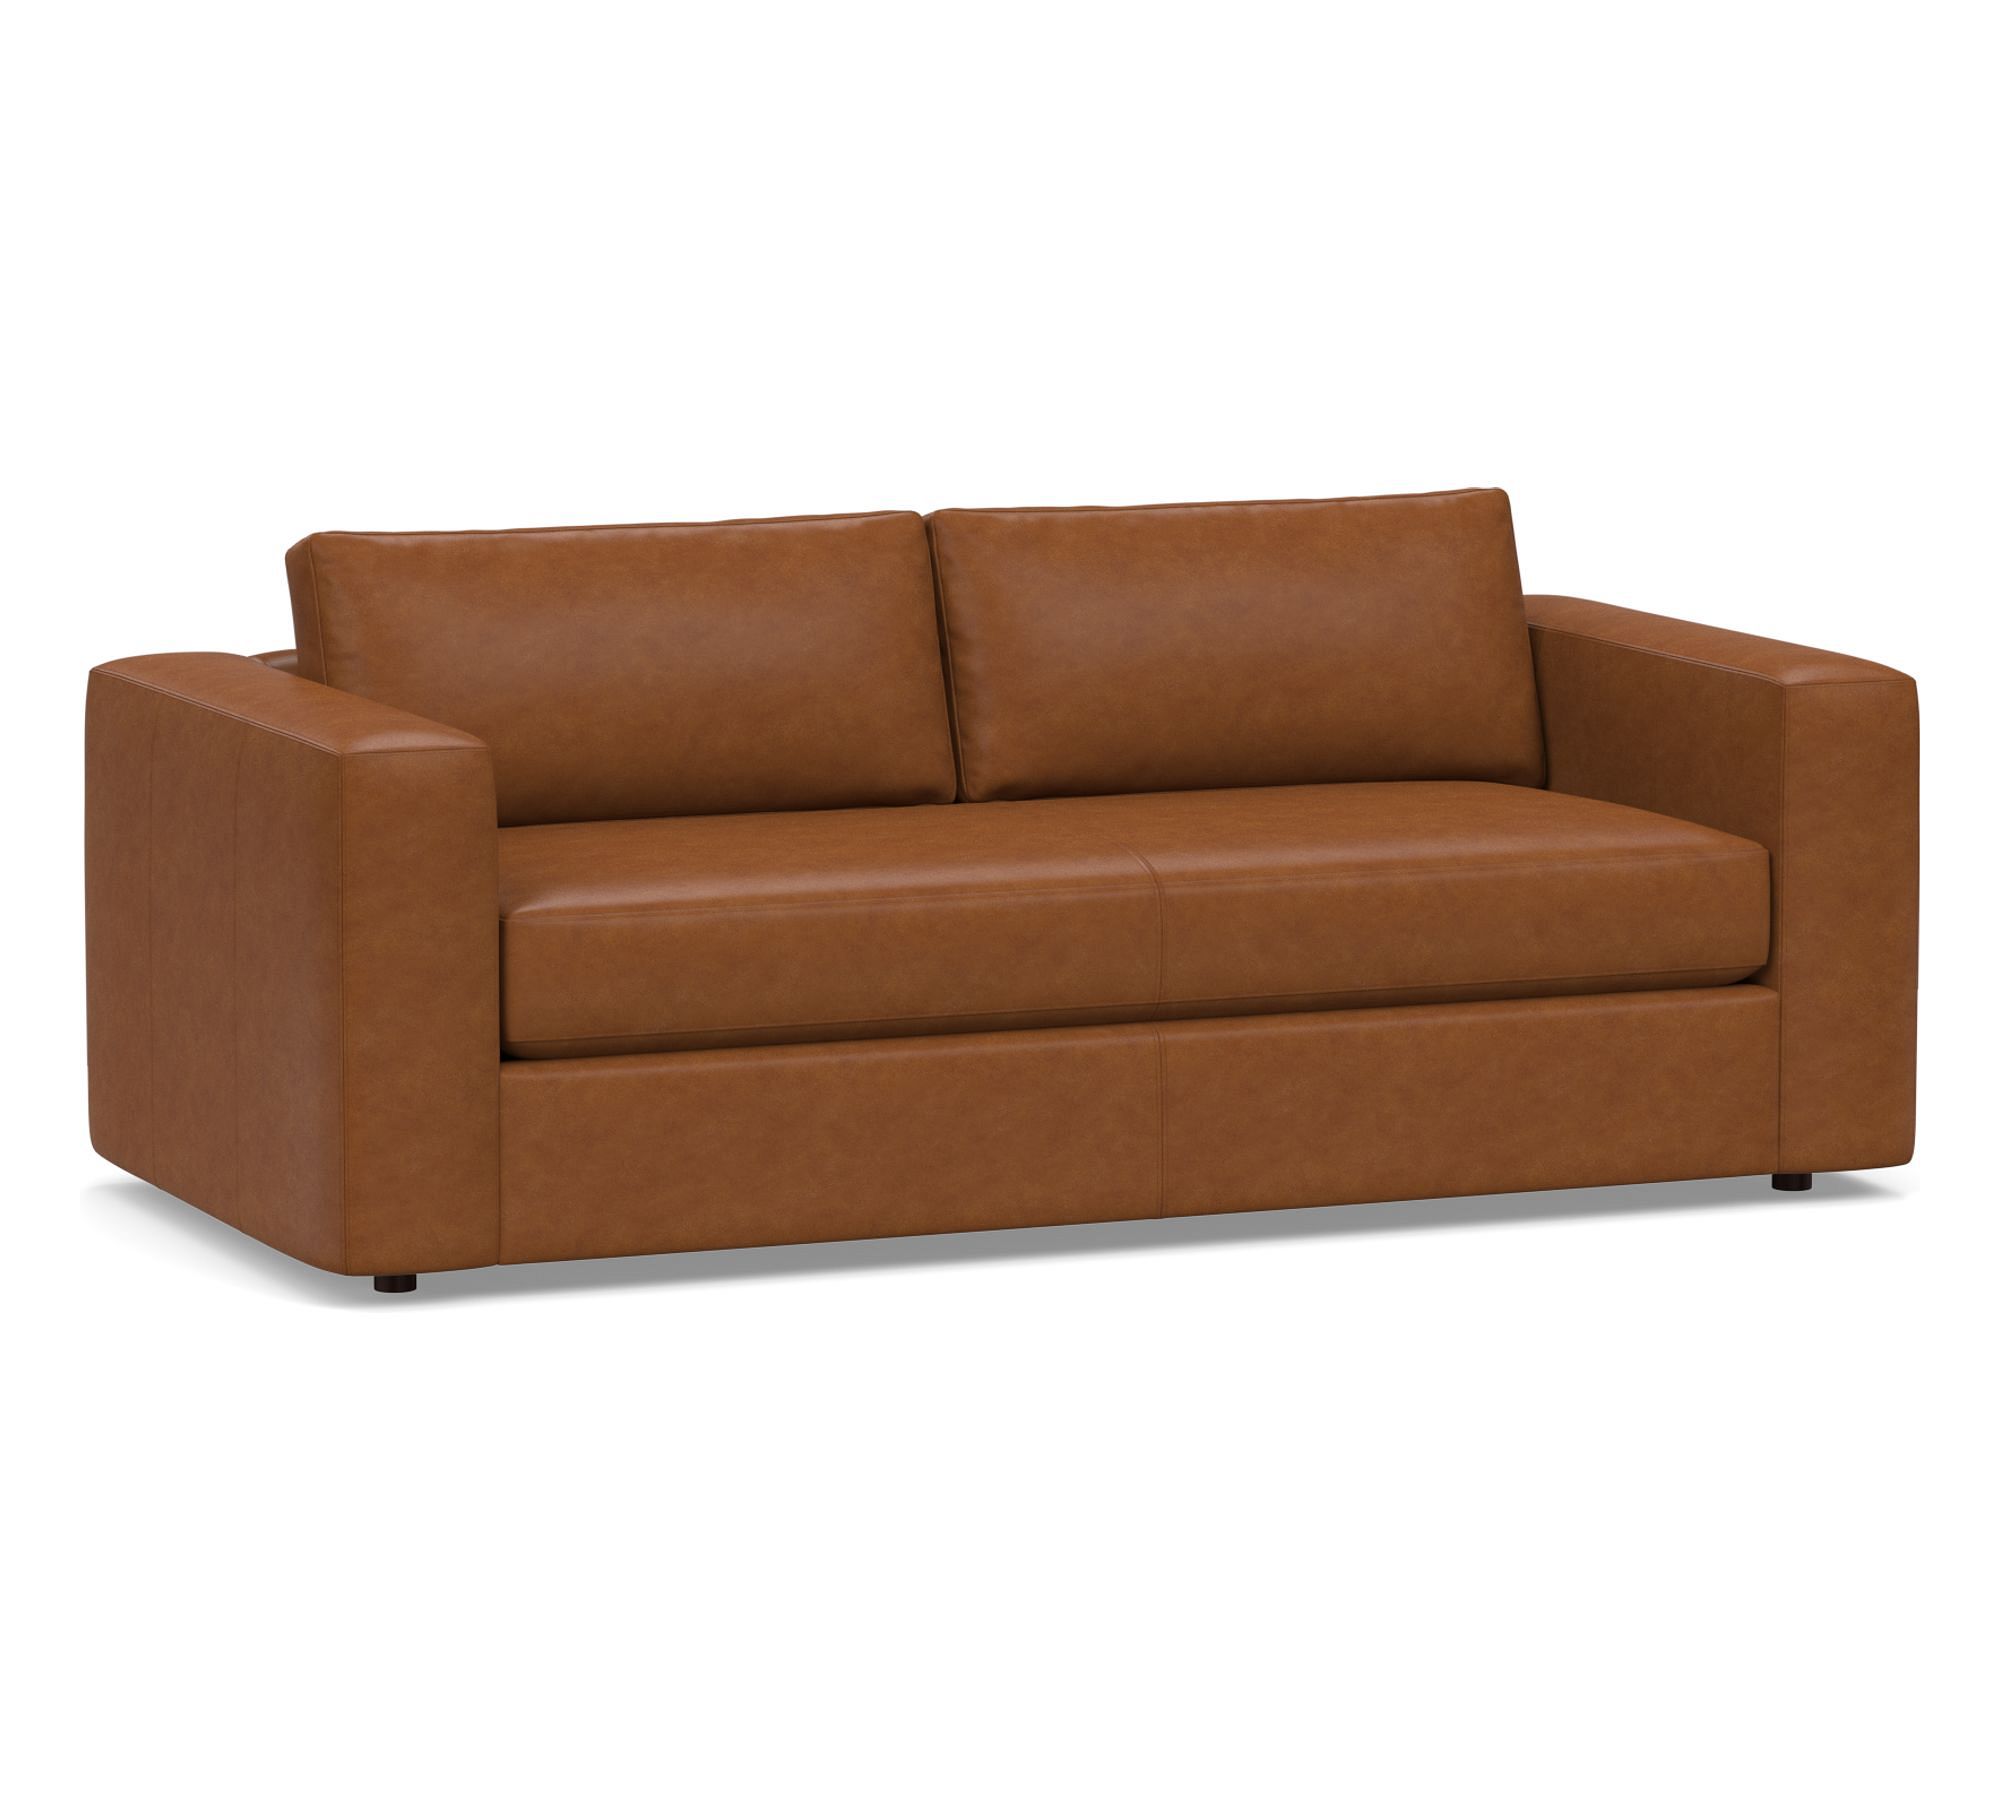 Carmel Wide Arm Leather Sleeper Sofa (86")